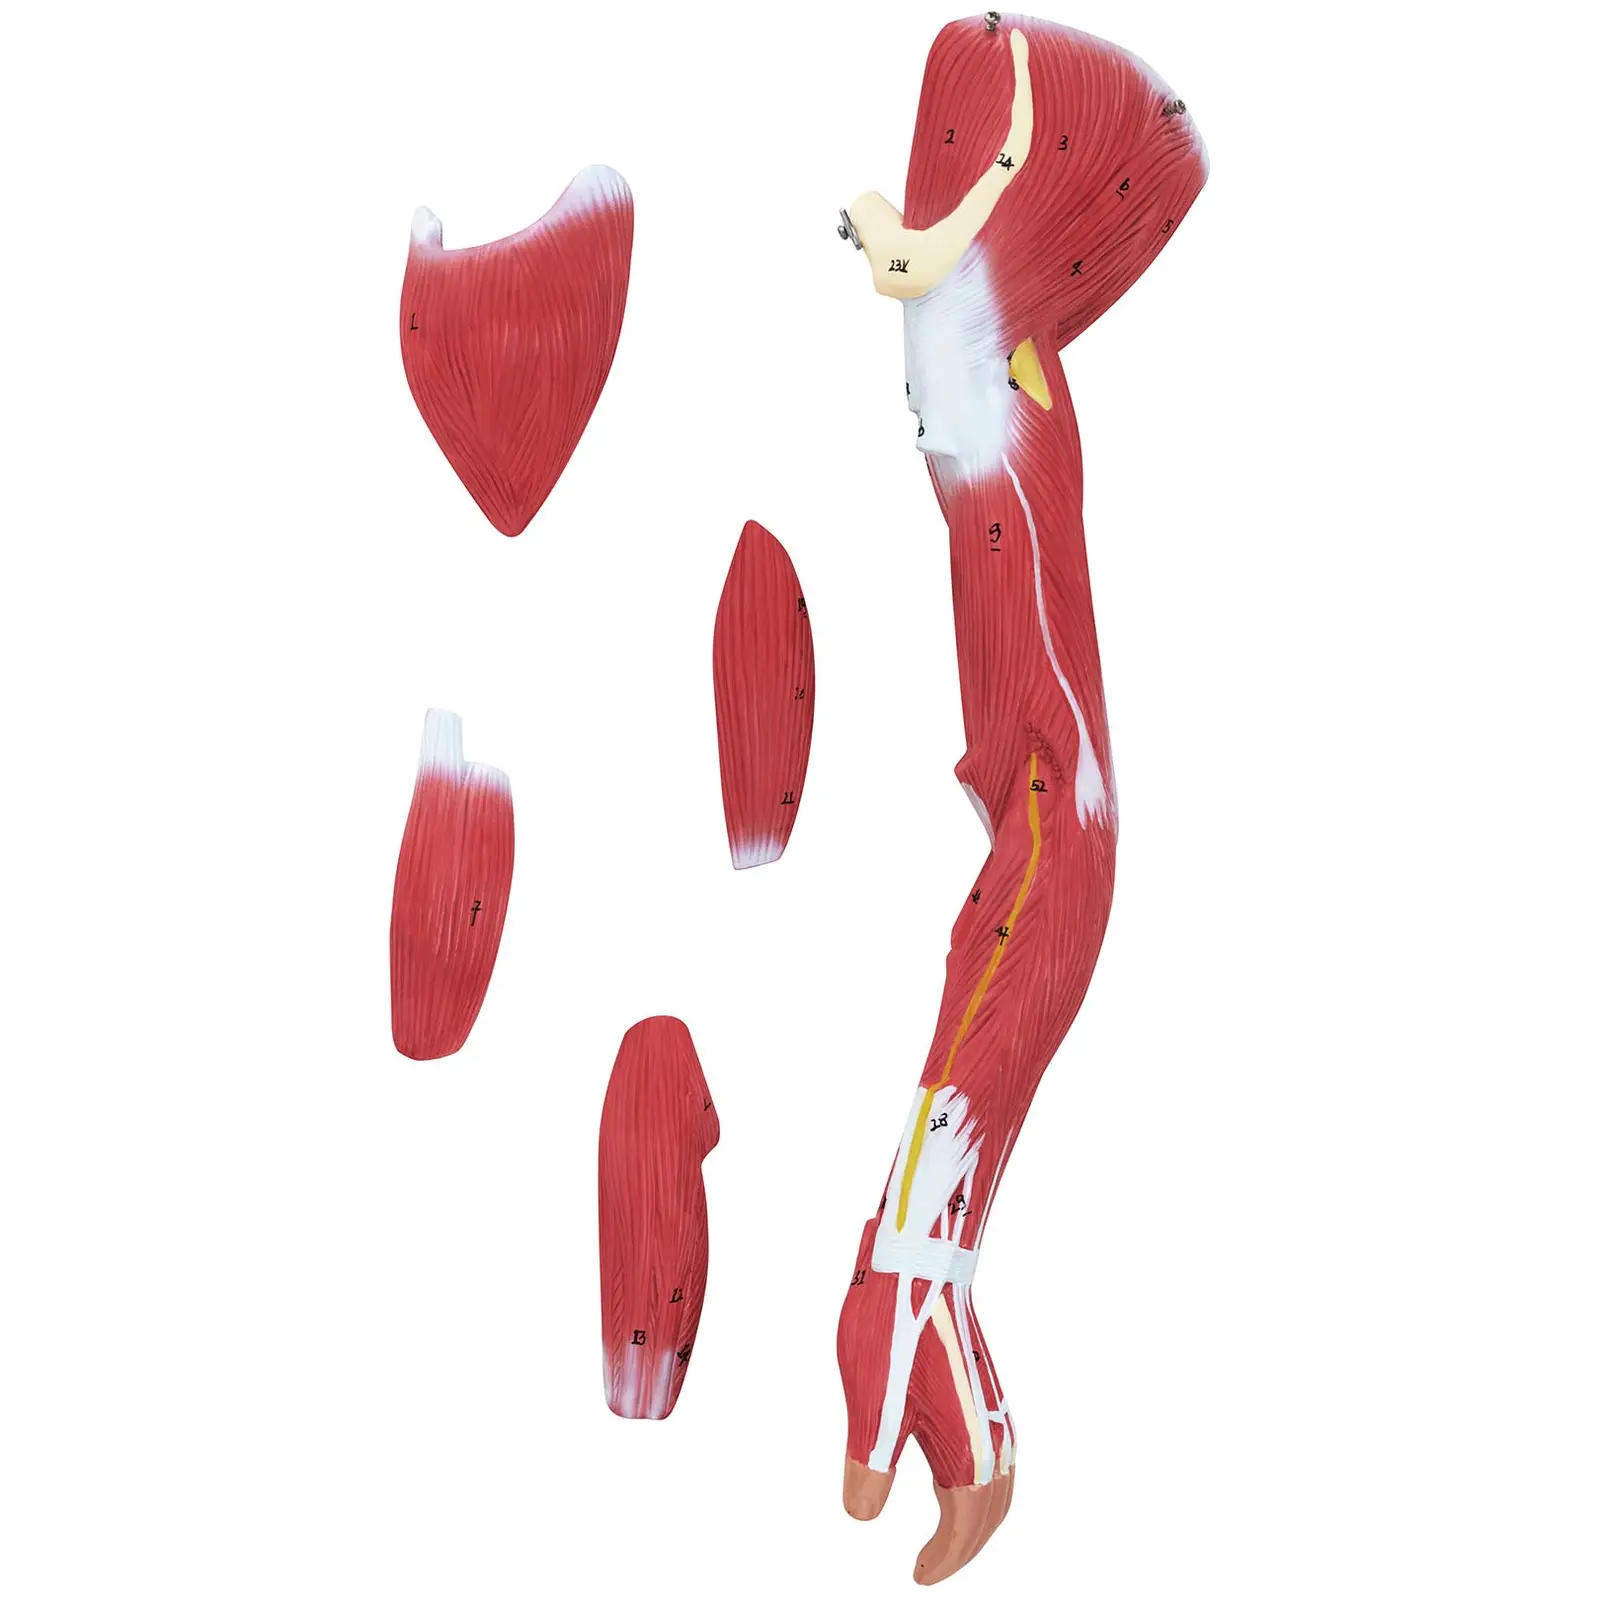 Модел на мускулатурата - унисекс - 27 части - височина 76 см